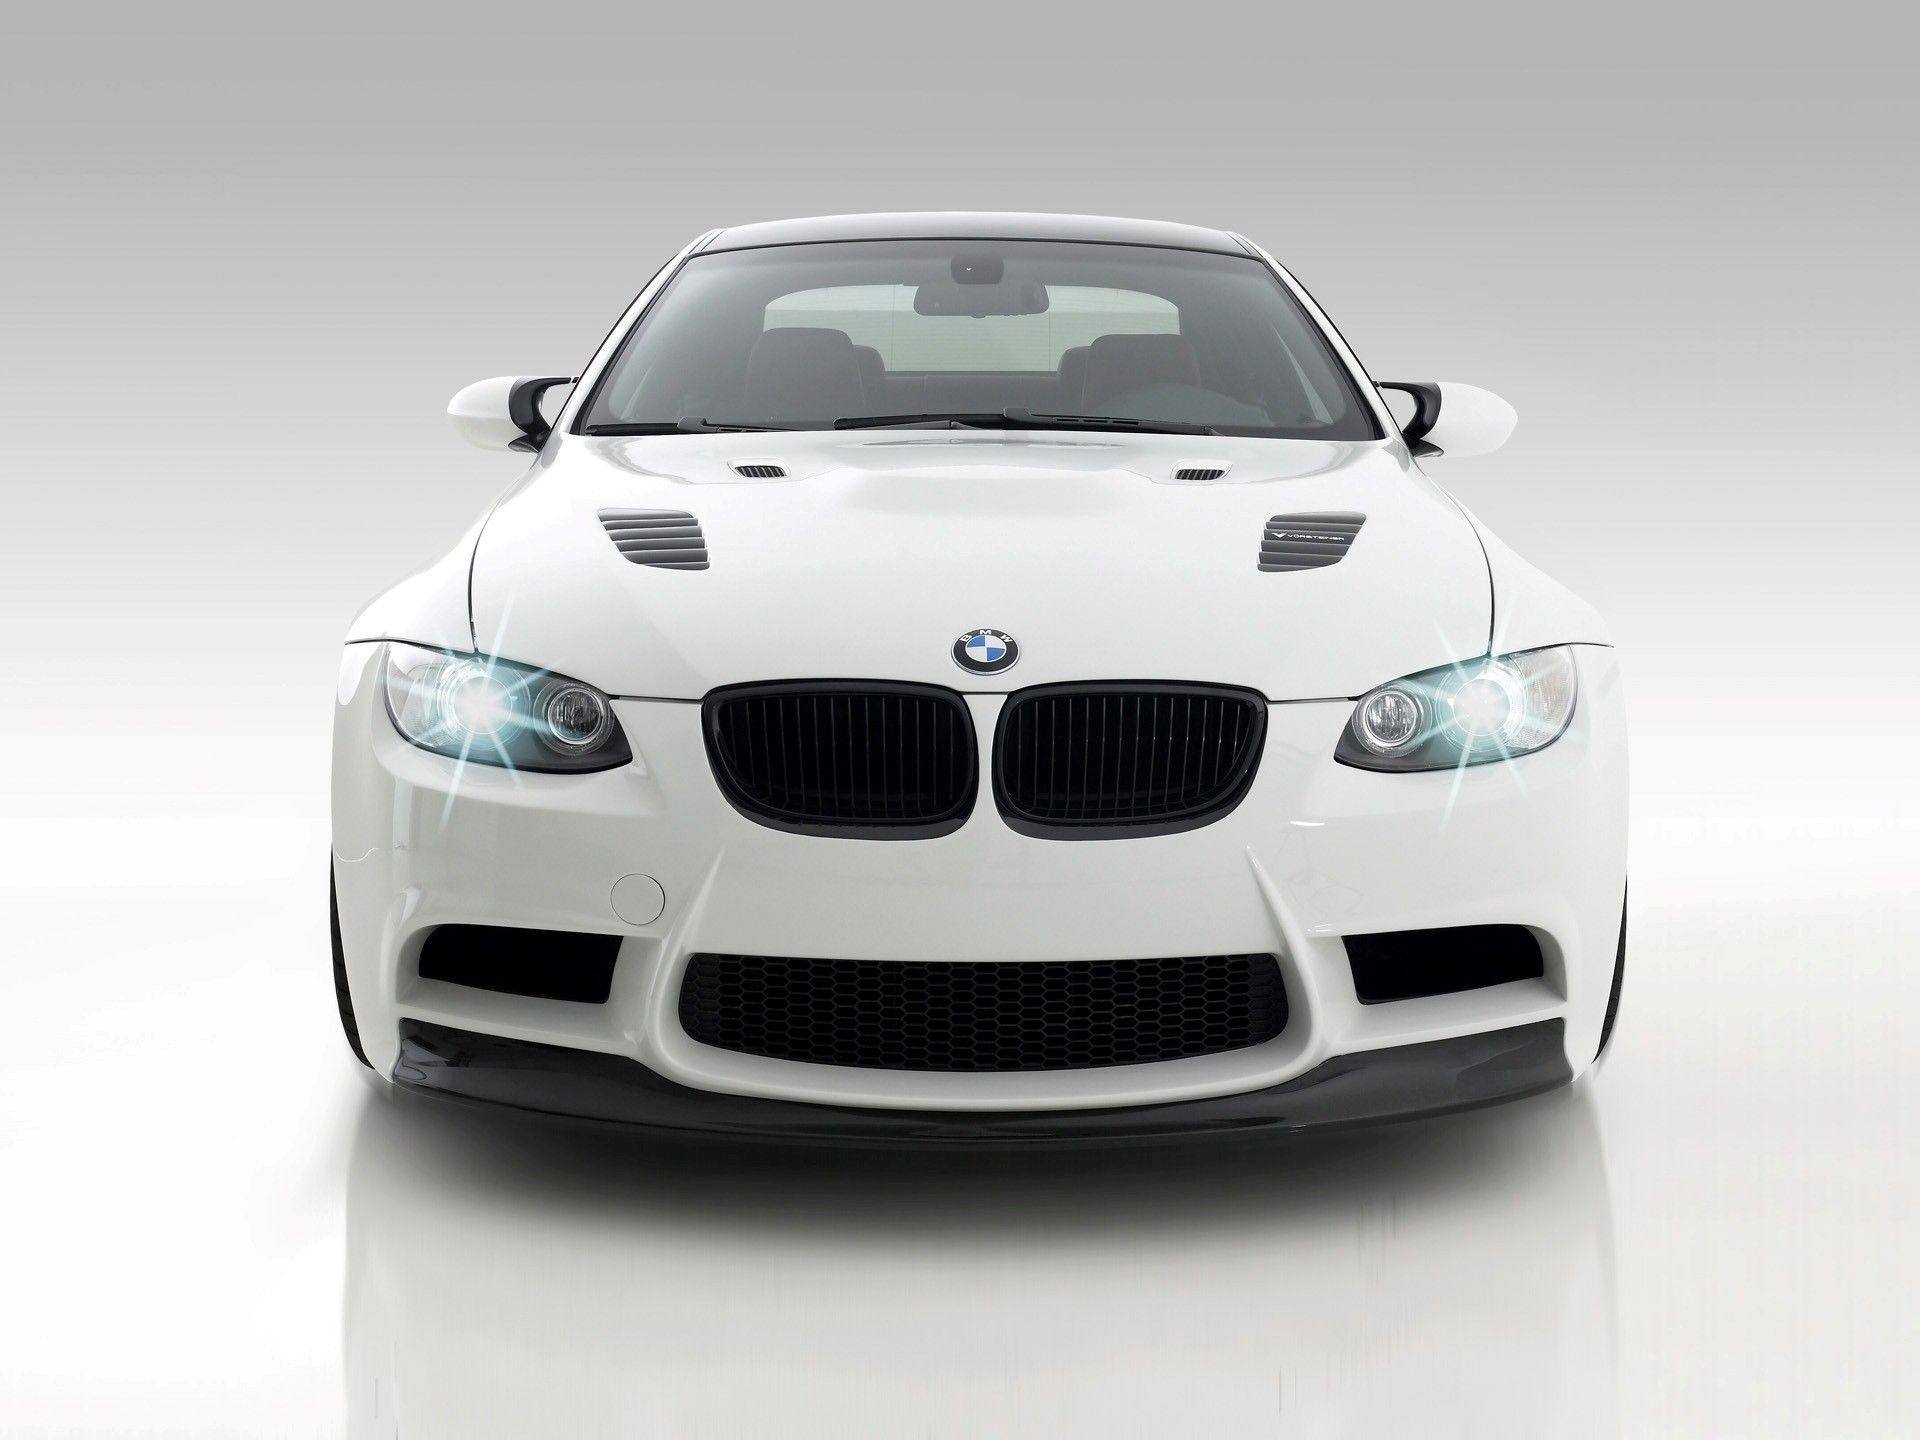 BMW Cars Wallpaper. Free Download HD Motors Latest New Image